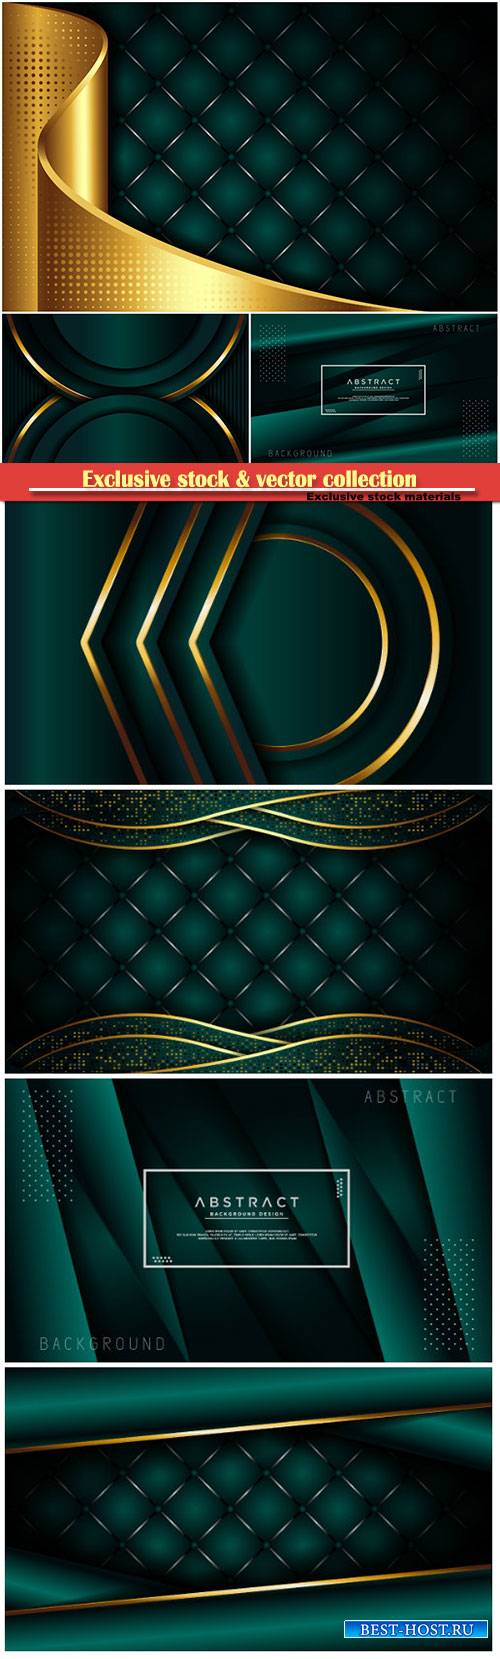 Luxury dark green background with overlap layer